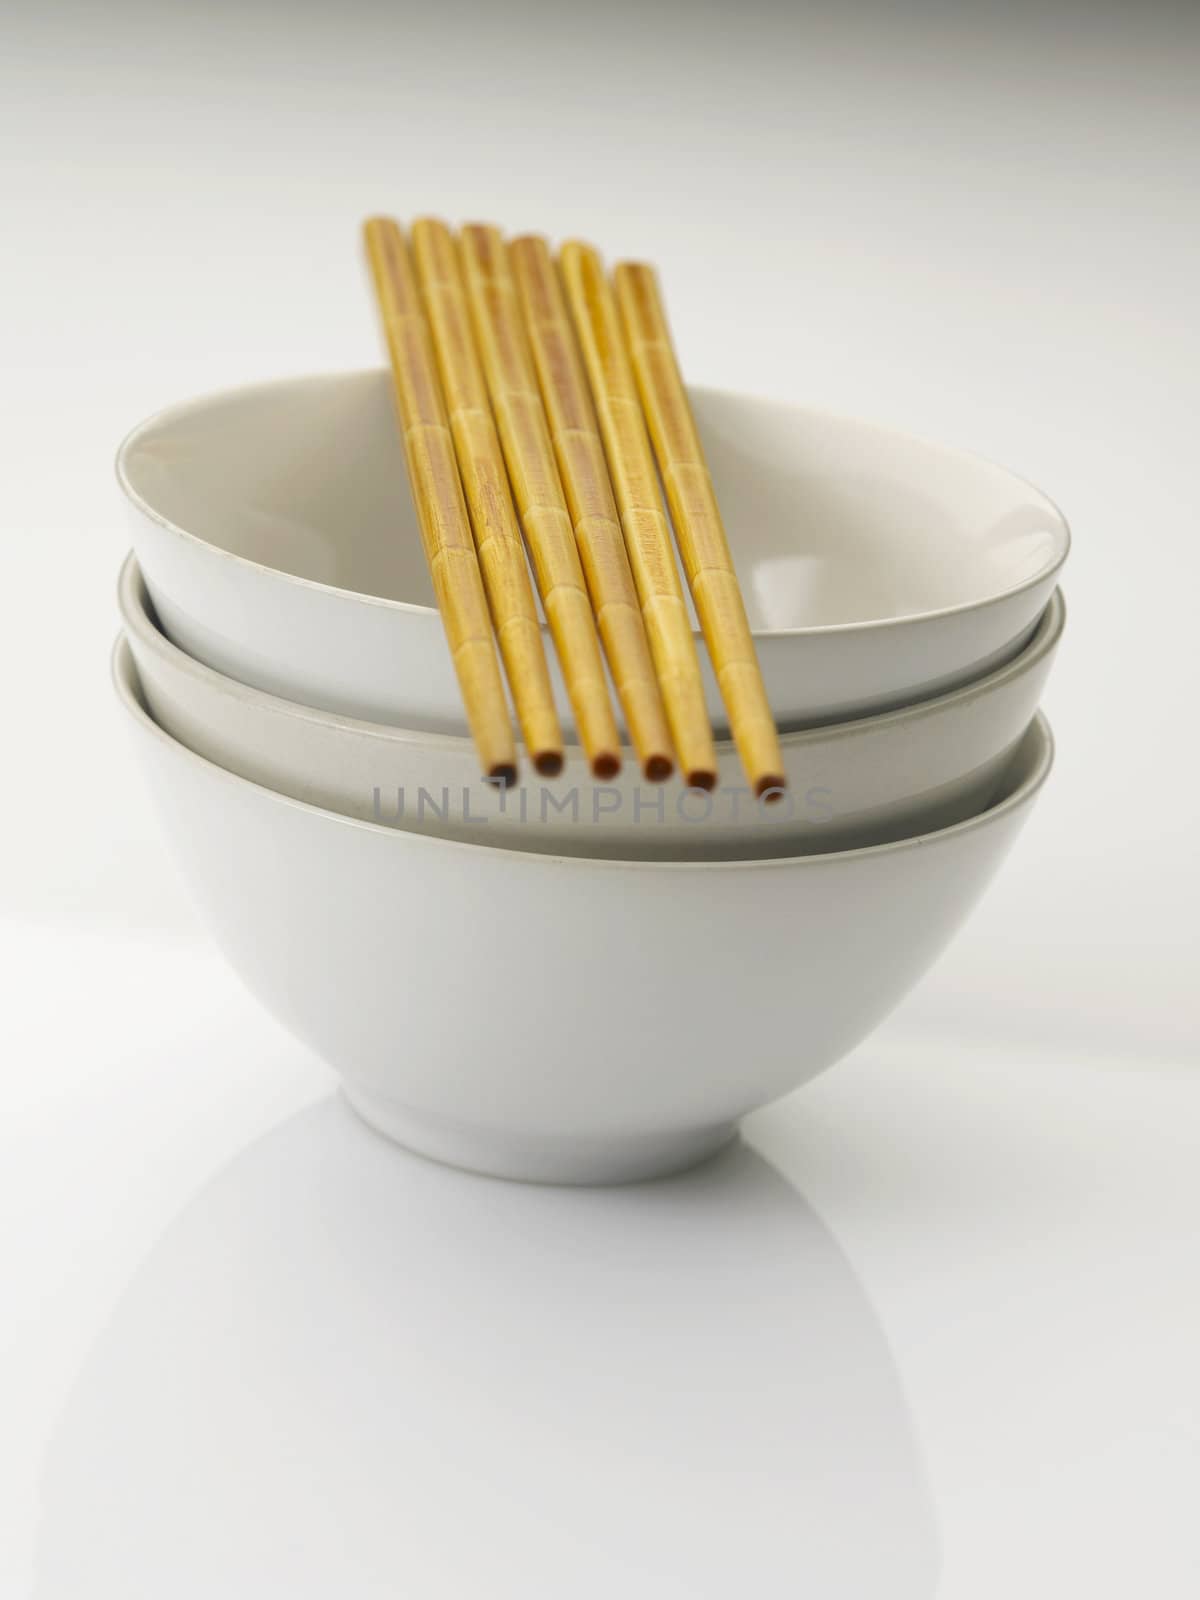 bowl and chopsticks by eskaylim